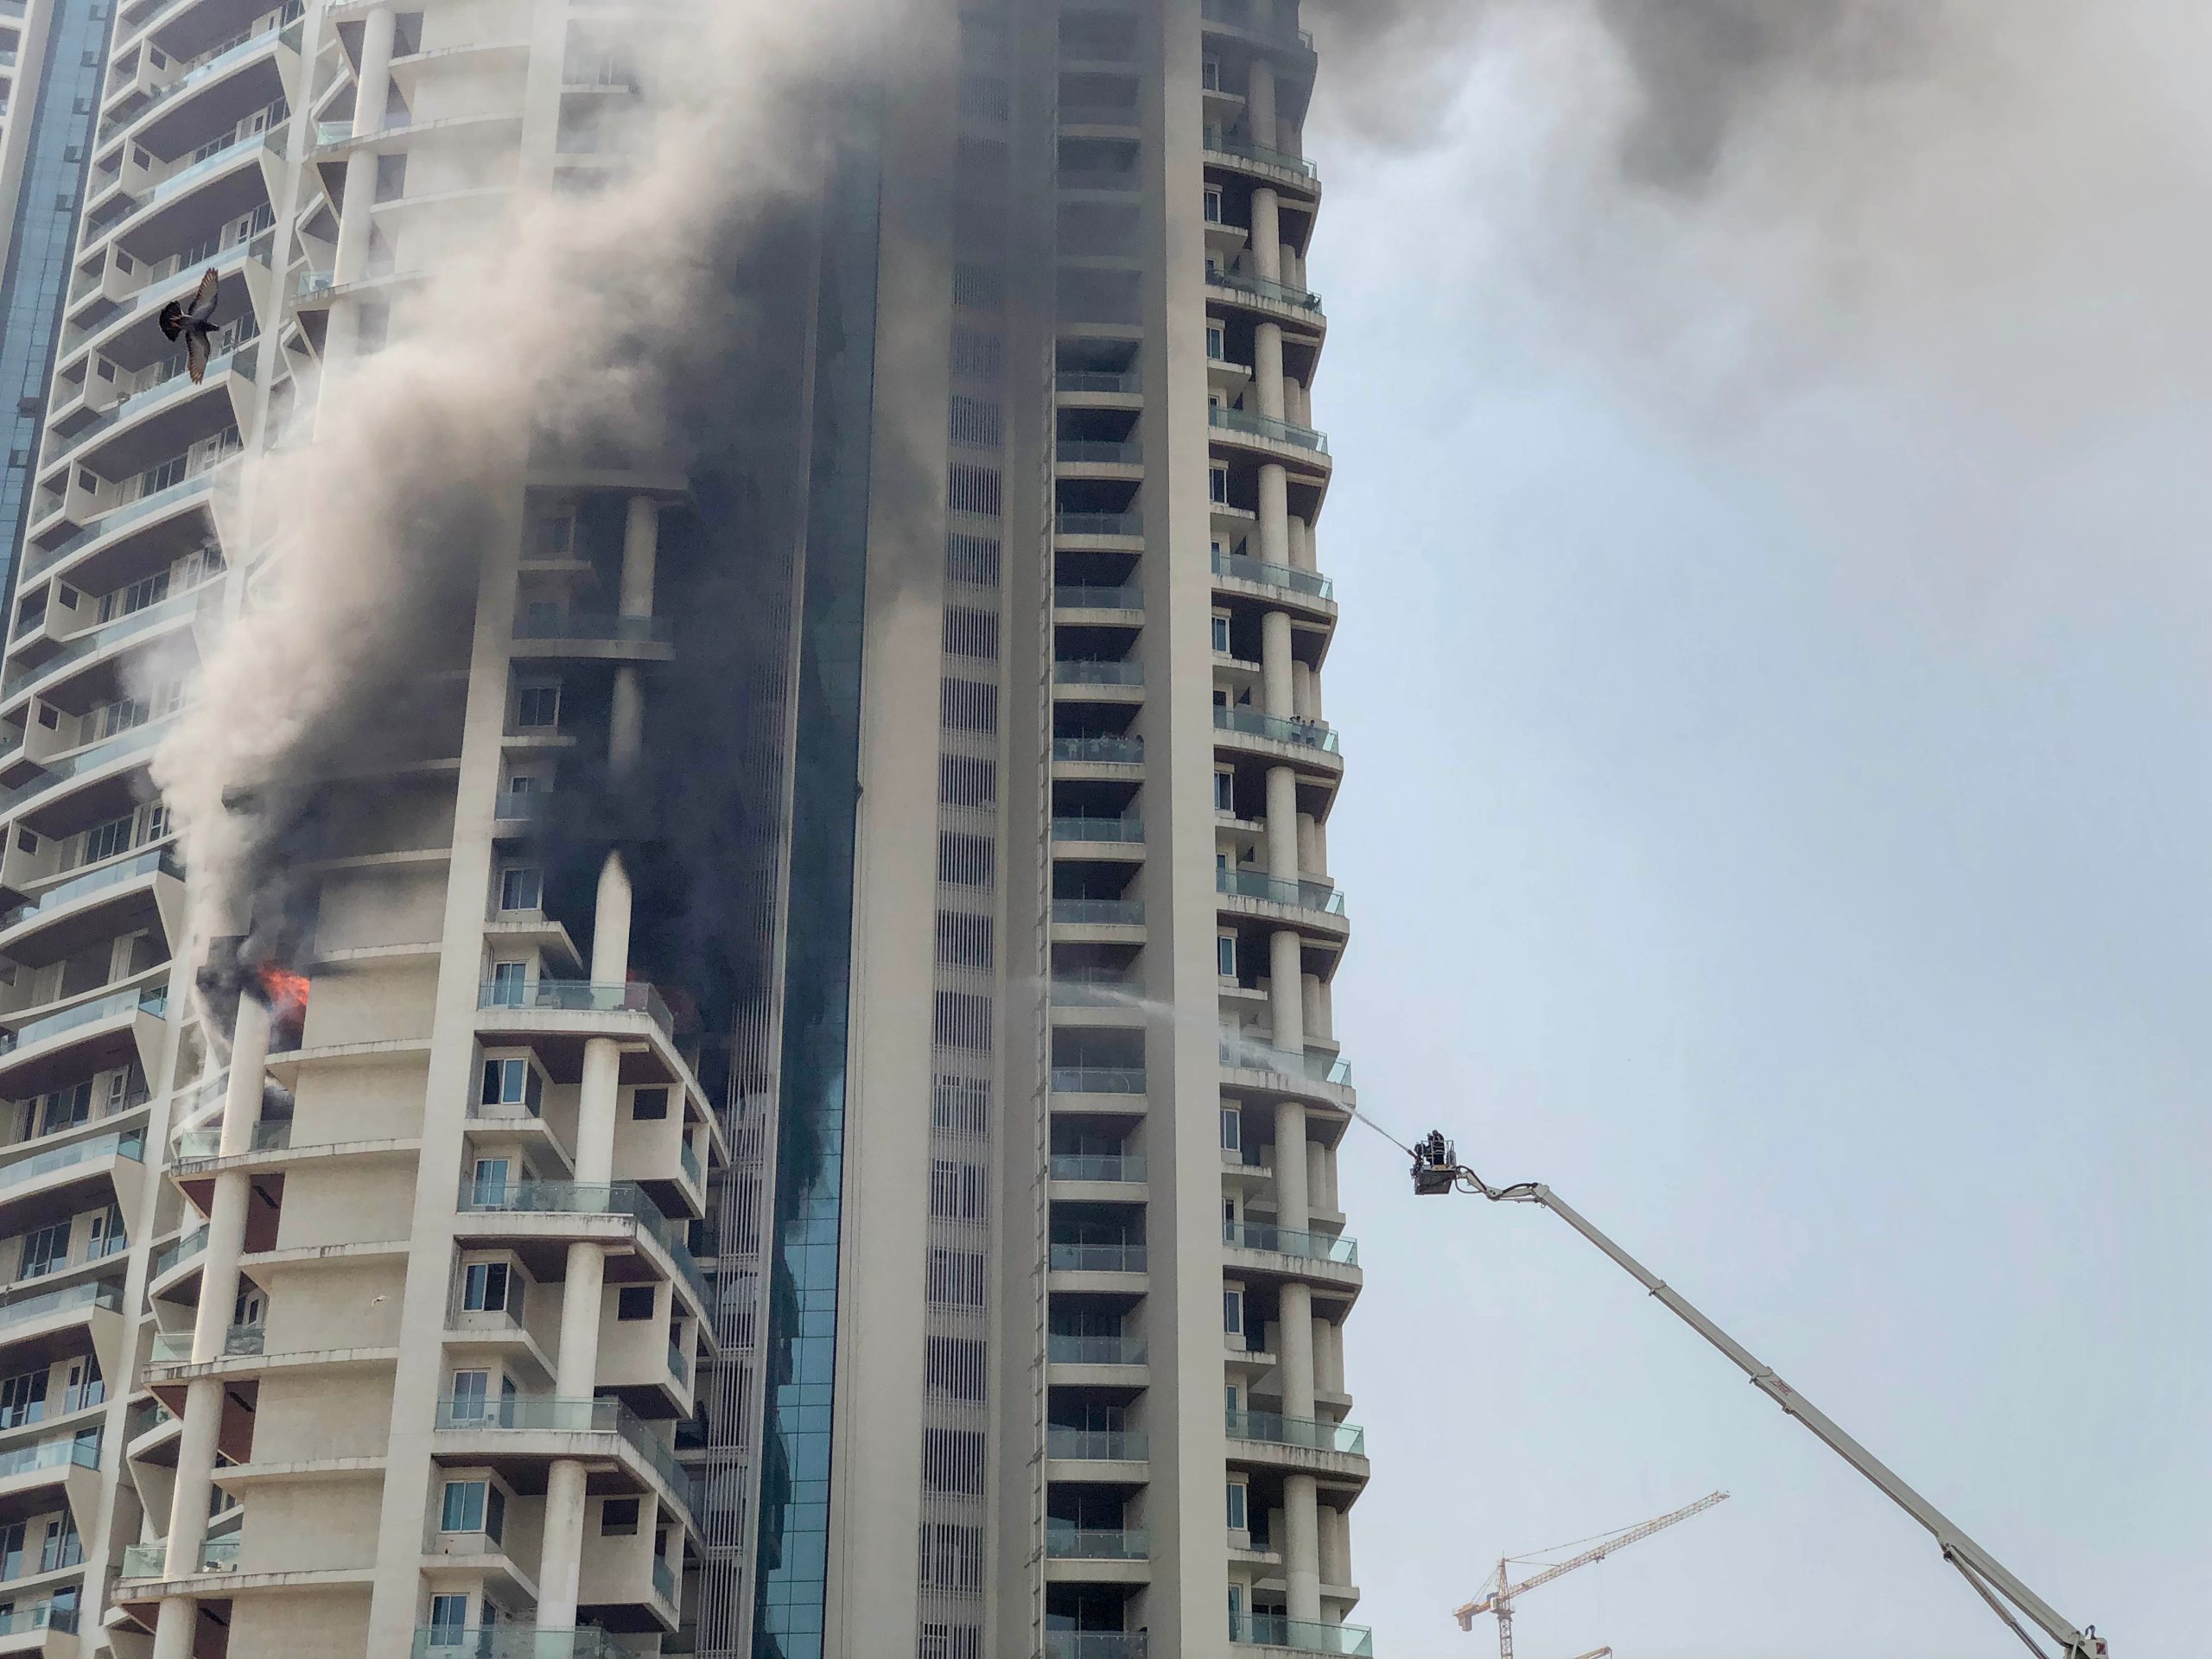 1 dead in fire incident at Mumbai’s multi-storey building